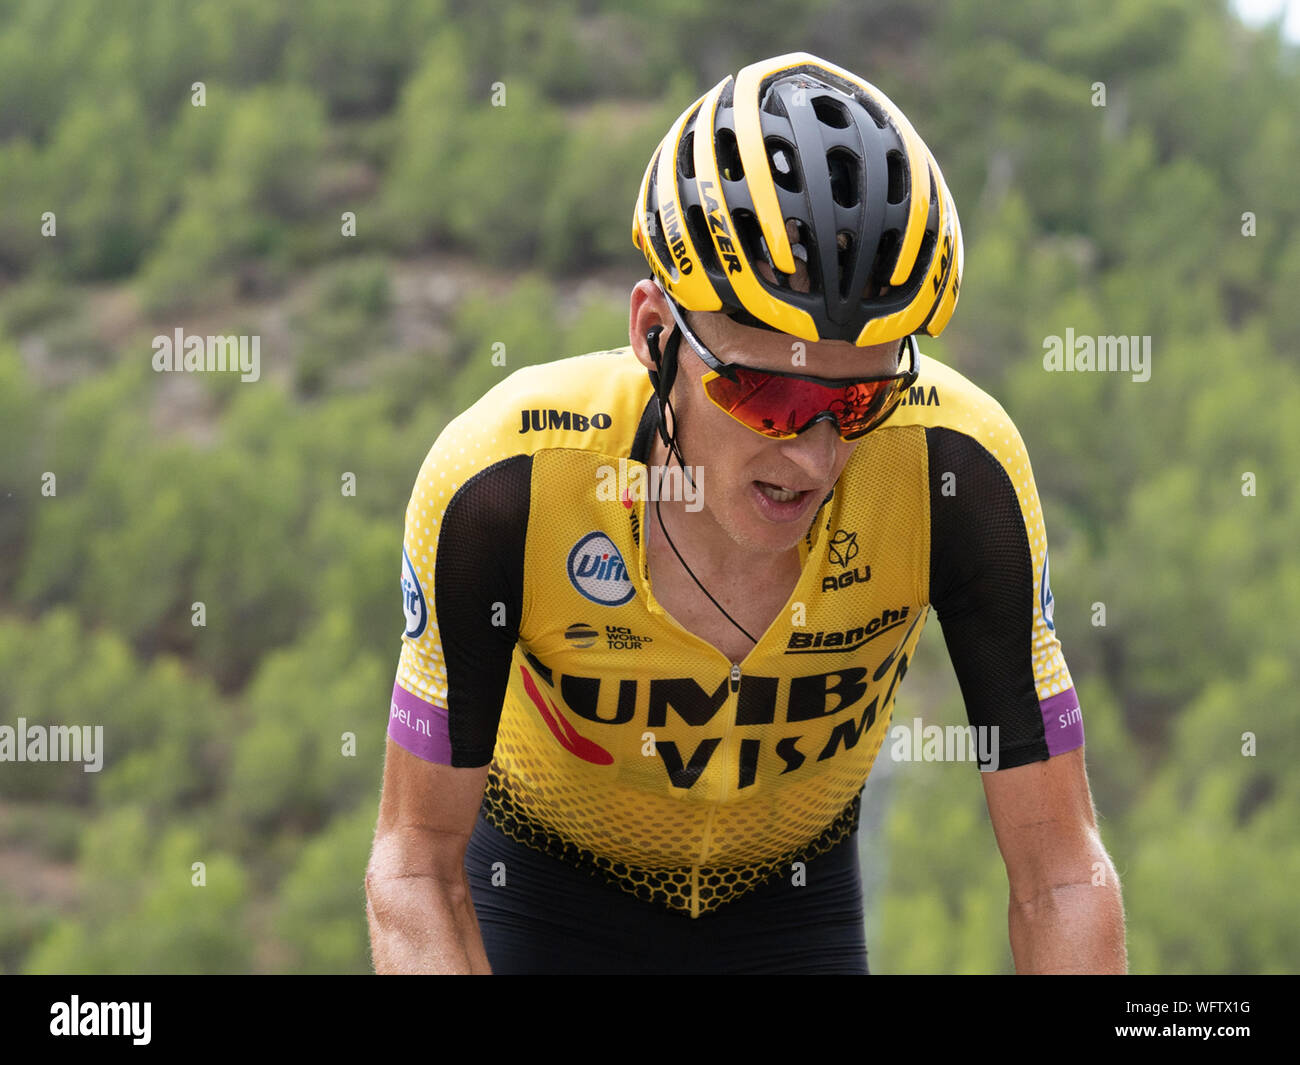 30 augustus 2019 Mas de la Costa, Spain Cycling Vuelta 2019    30-08-2019: Ronde van Spanje: Onda: Mas de la Costa  Robert Gesink, Jumbo Visma team Stock Photo